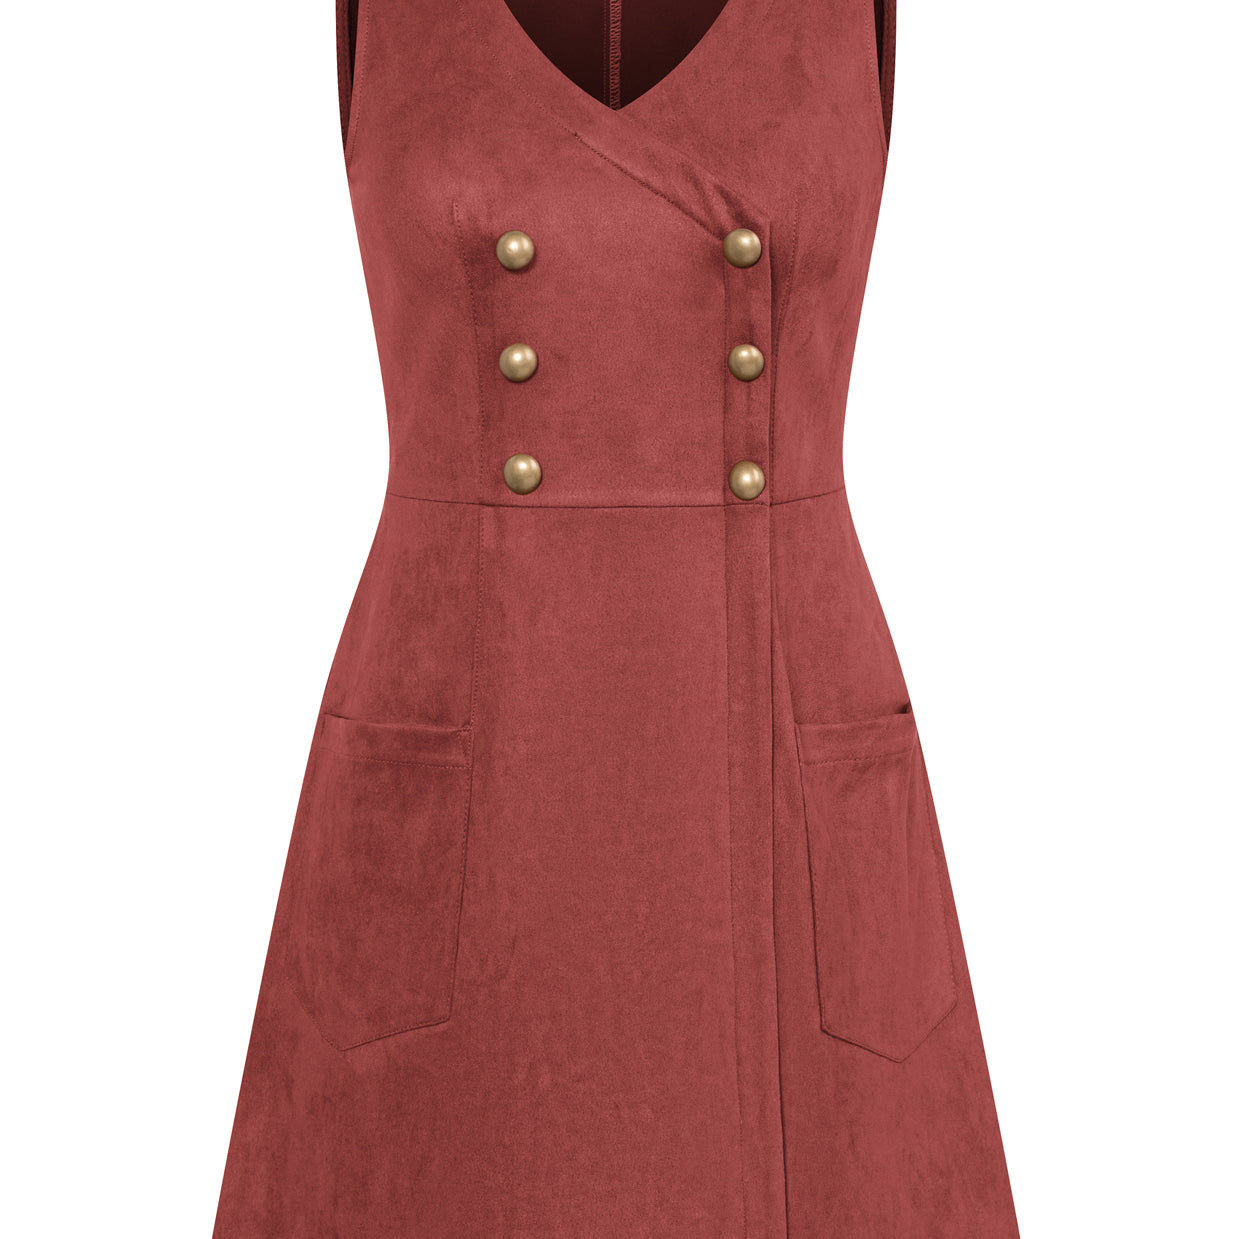 Vintage Faux Suede Dress Sleeveless V-Neck Elastic Waist A-Line Dress